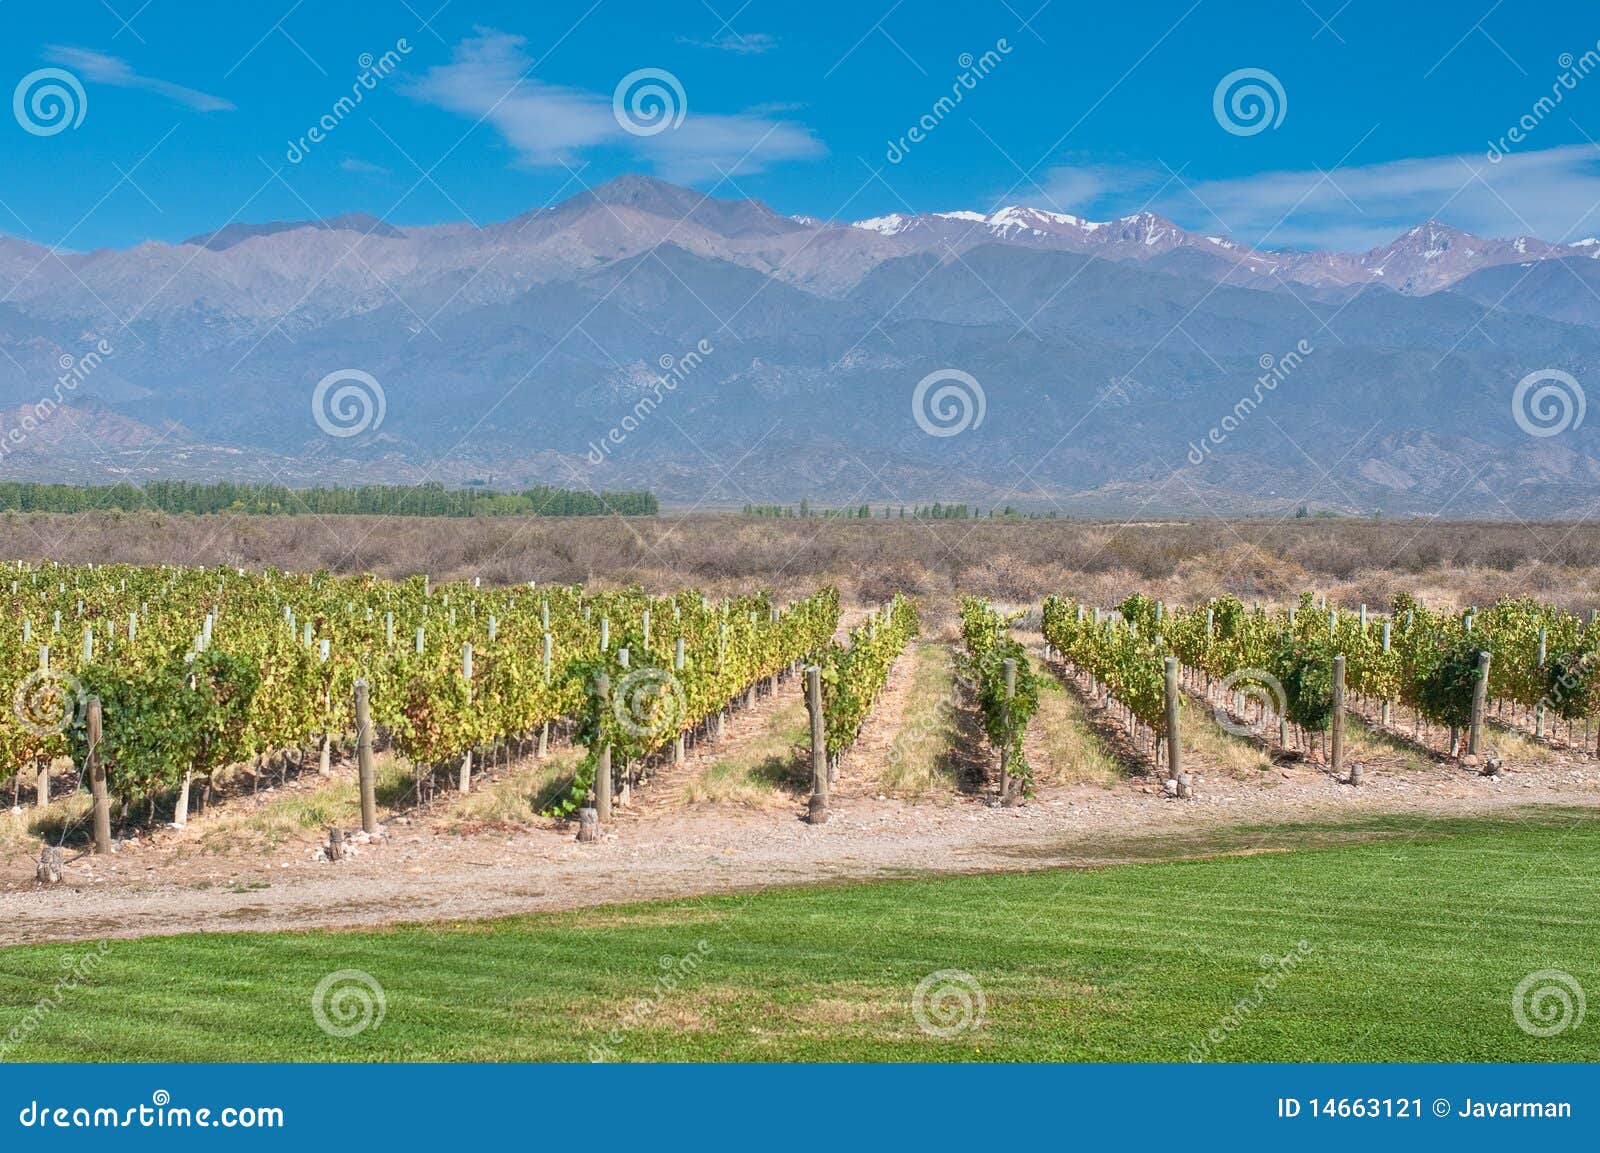 vineyards of mendoza, argentina